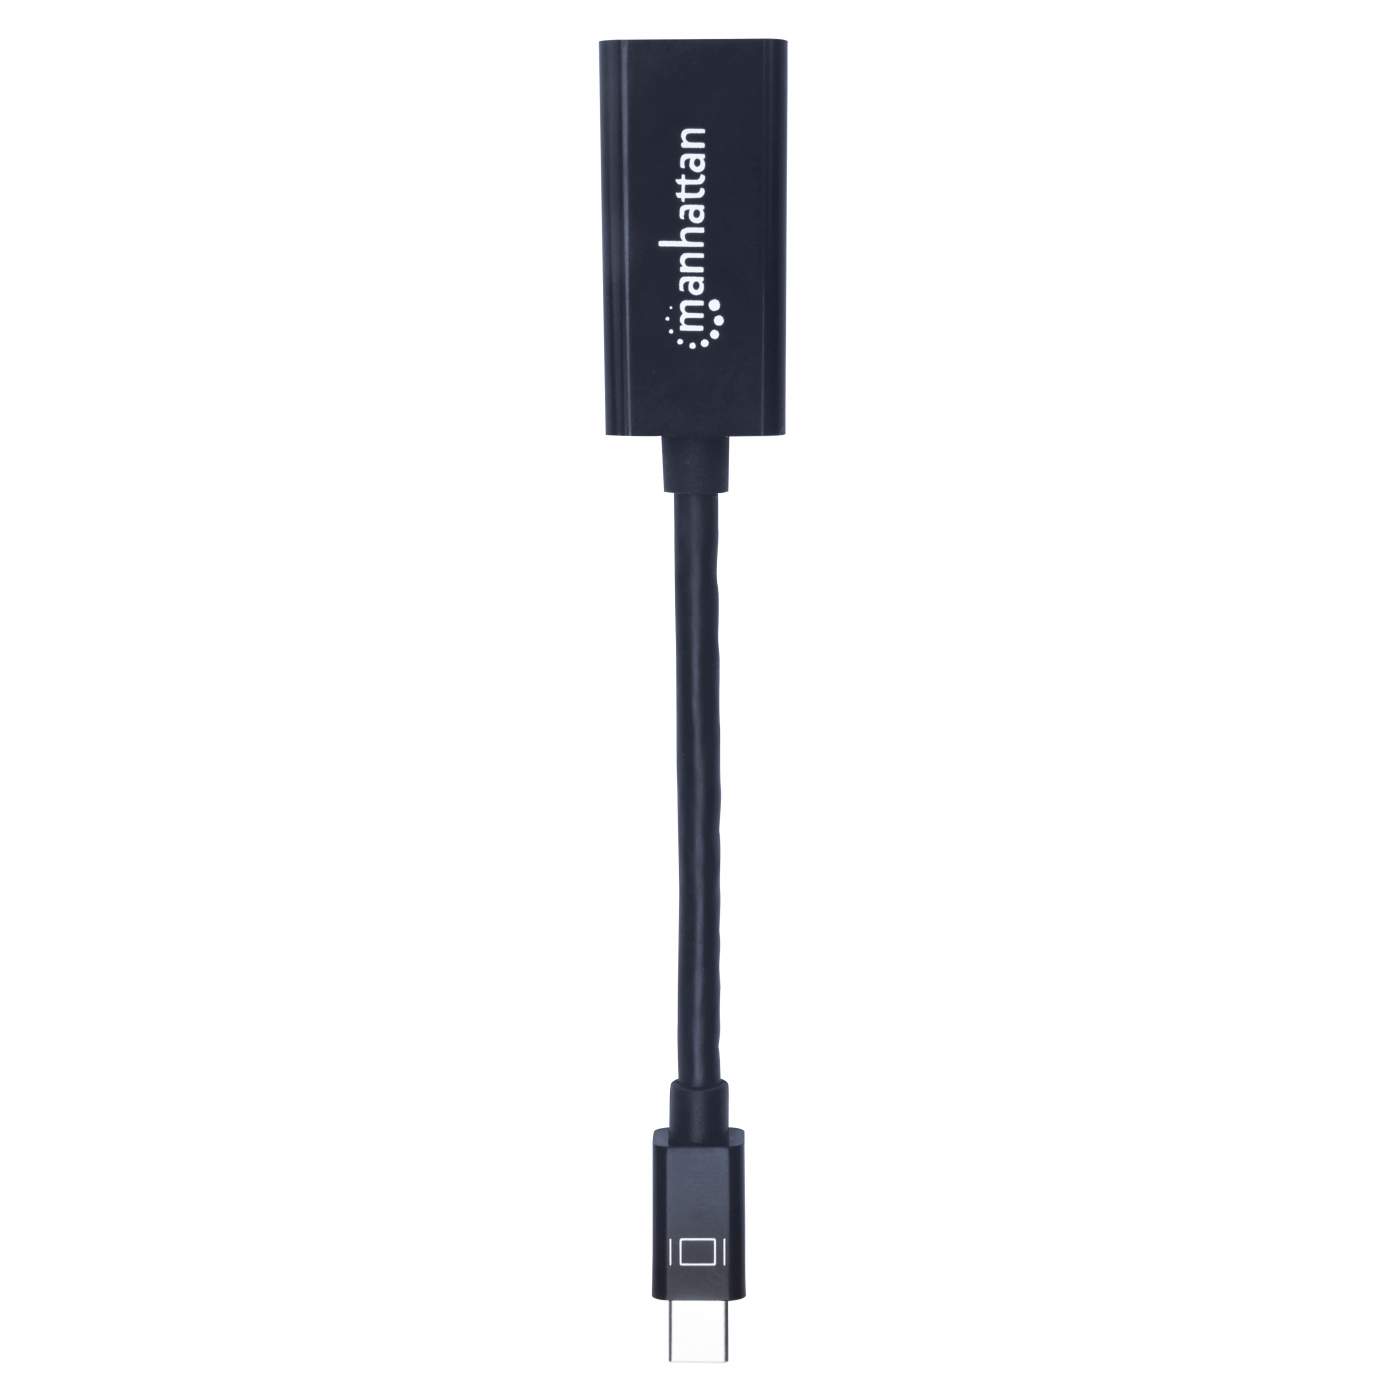 Manhattan Câble DisplayPort vers HDMI 1080p (152662)